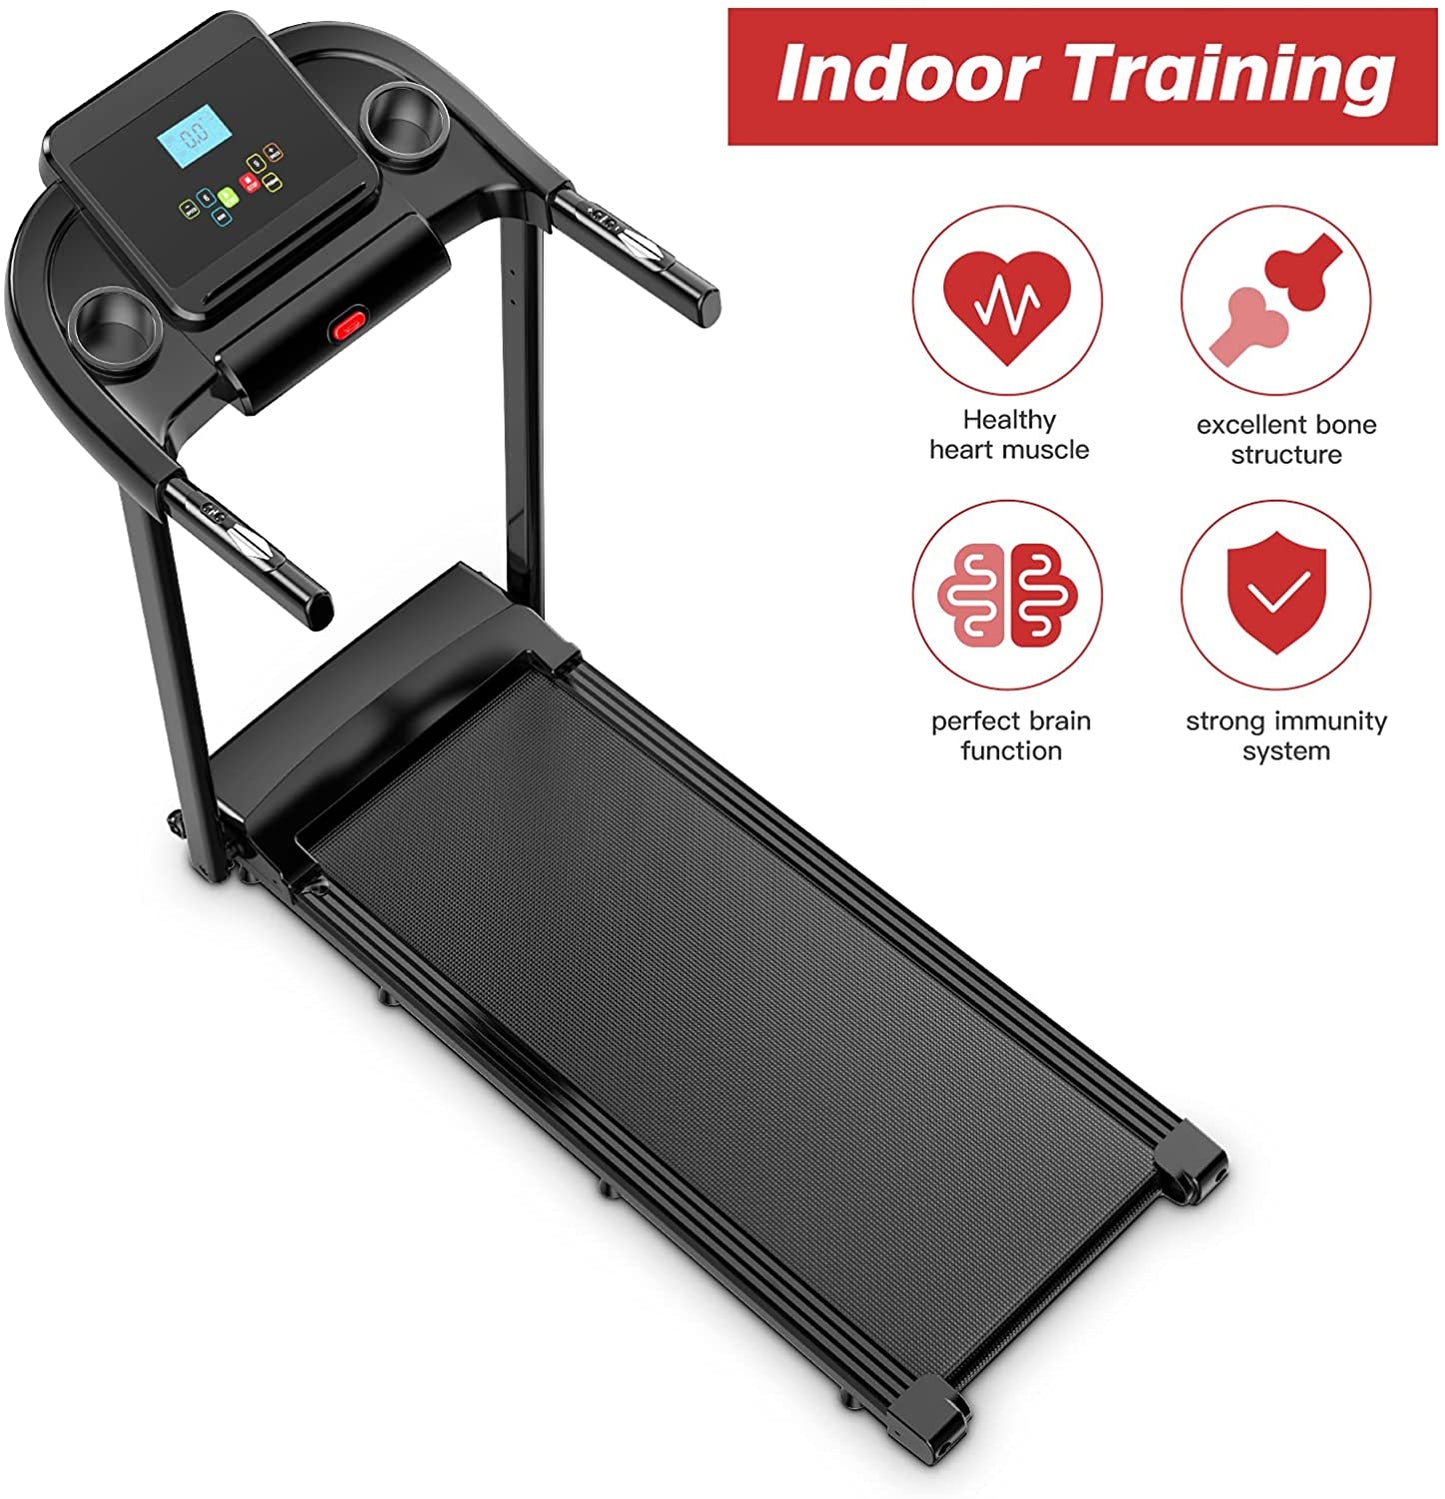 Dripex Treadmill Running Machine 1-12km/h with 3 Preset Sport Modes Holder